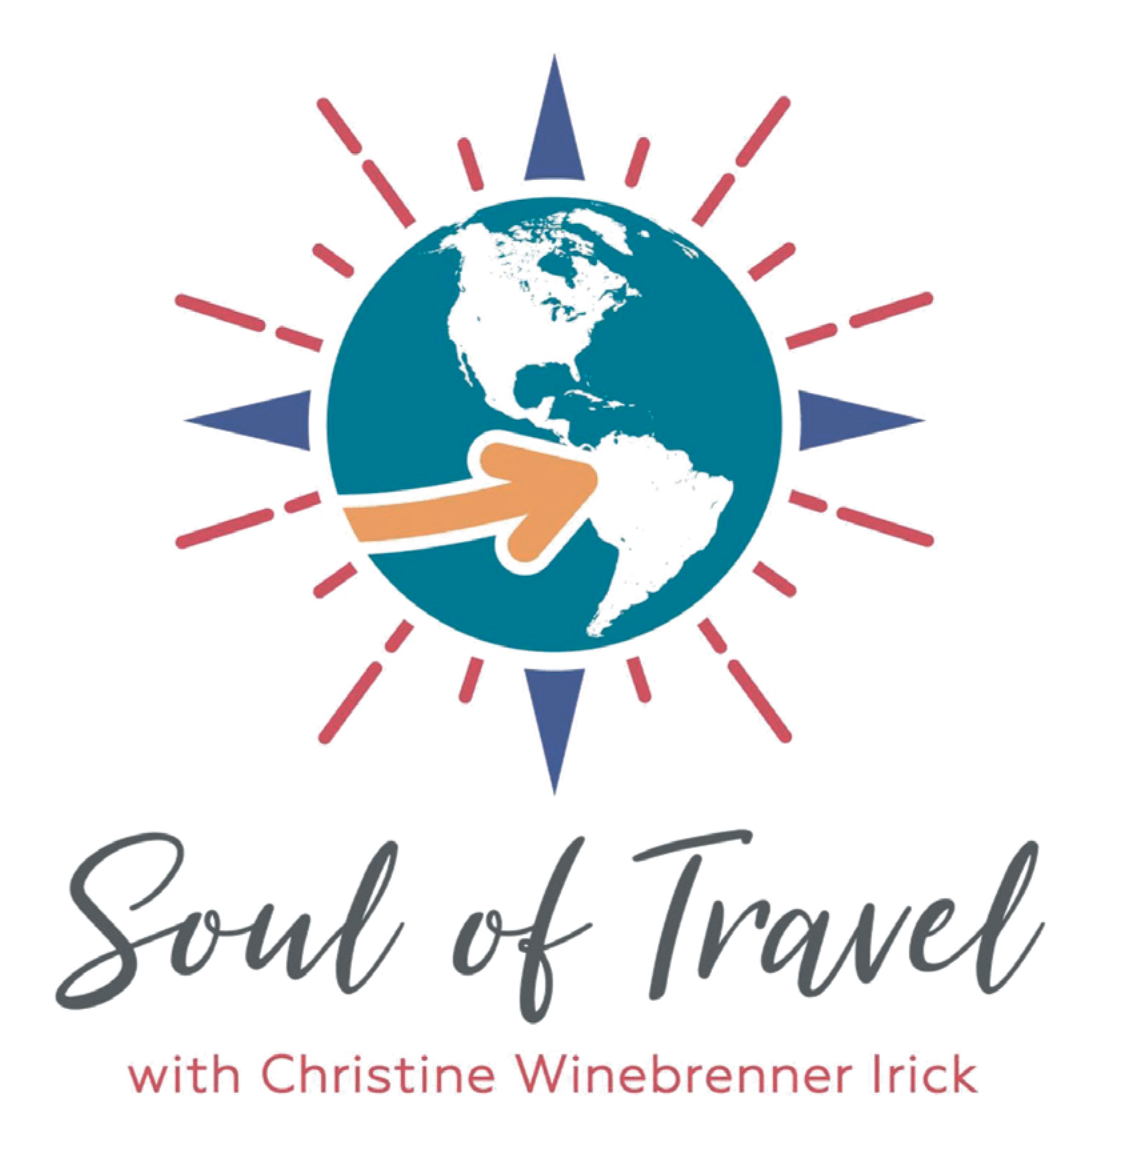 Soul of Travel